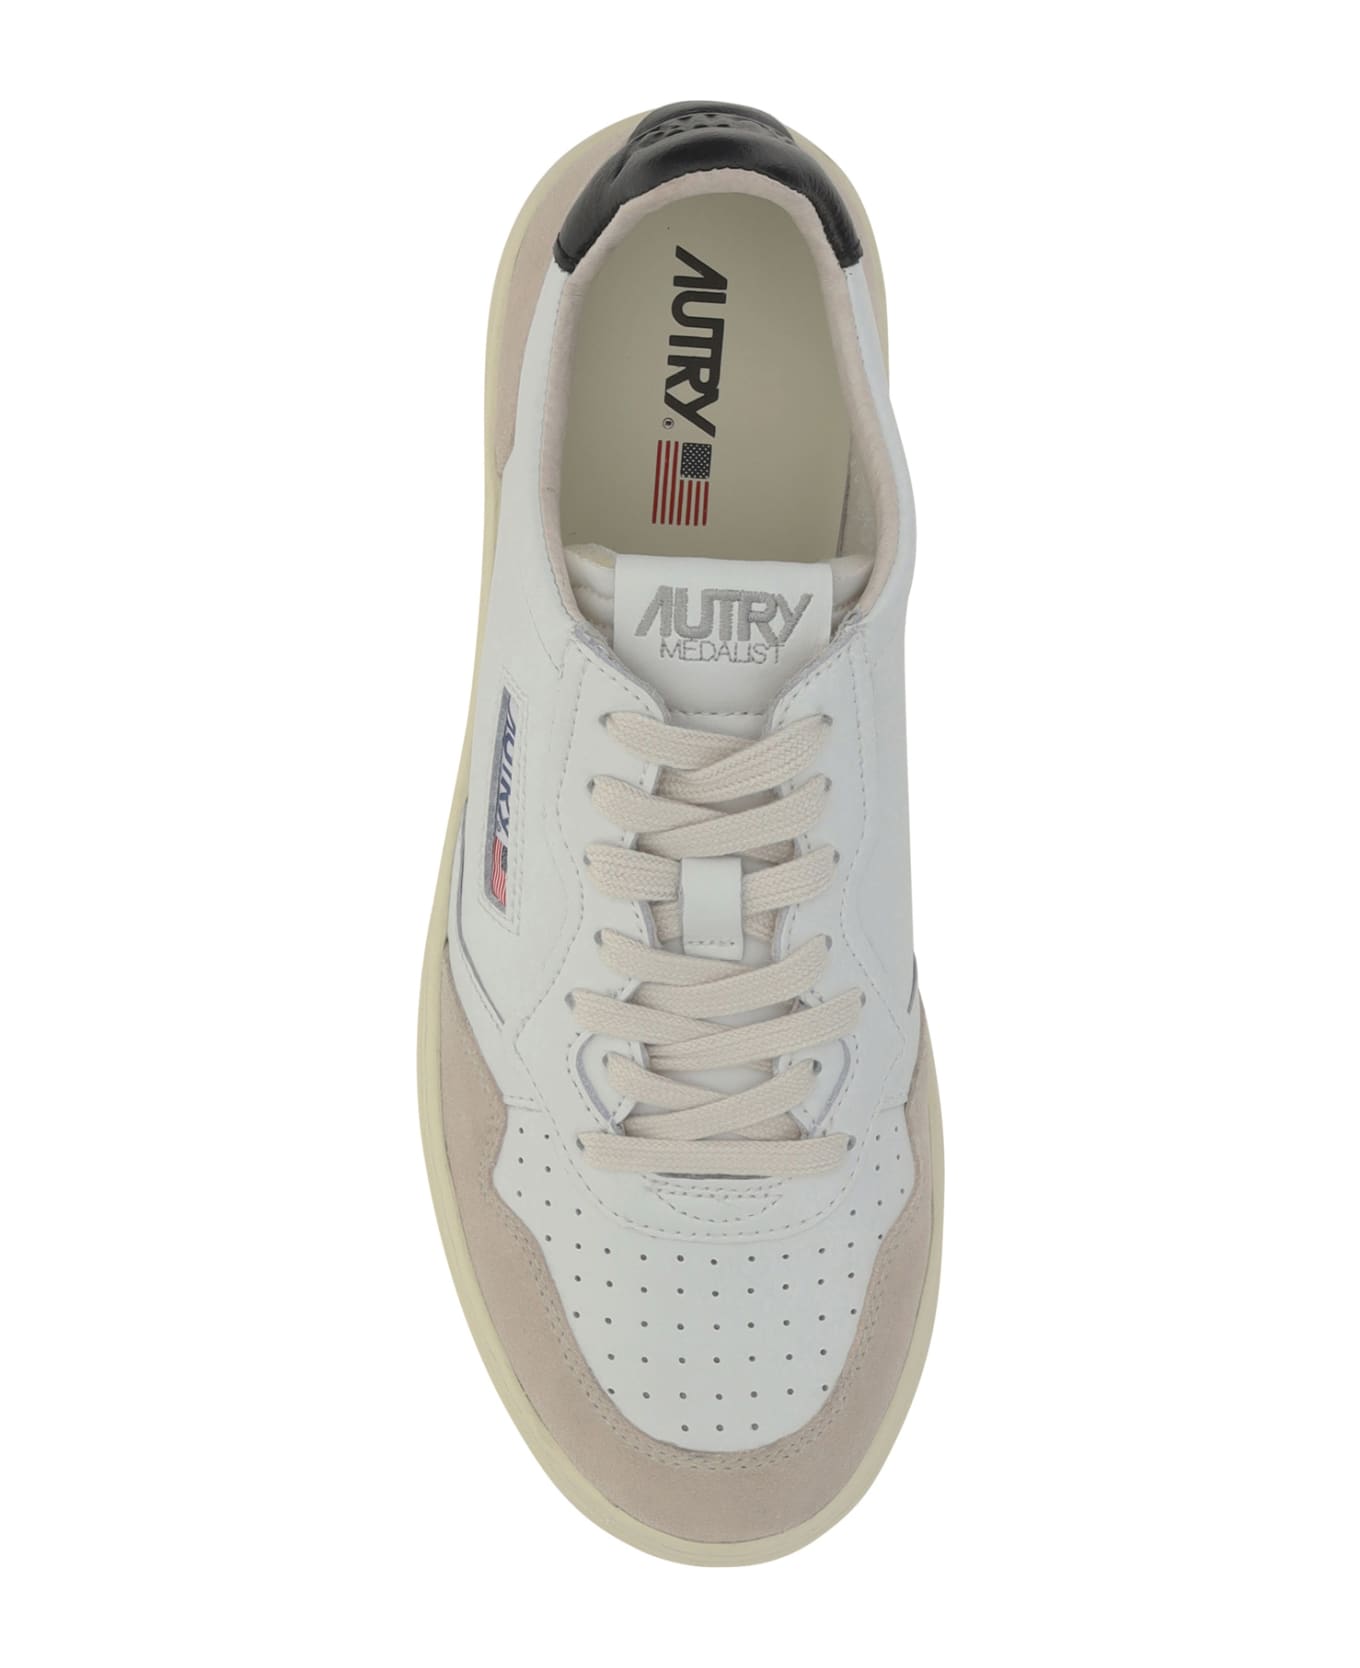 Autry Medialist Sneakers - Bianco/Nero スニーカー